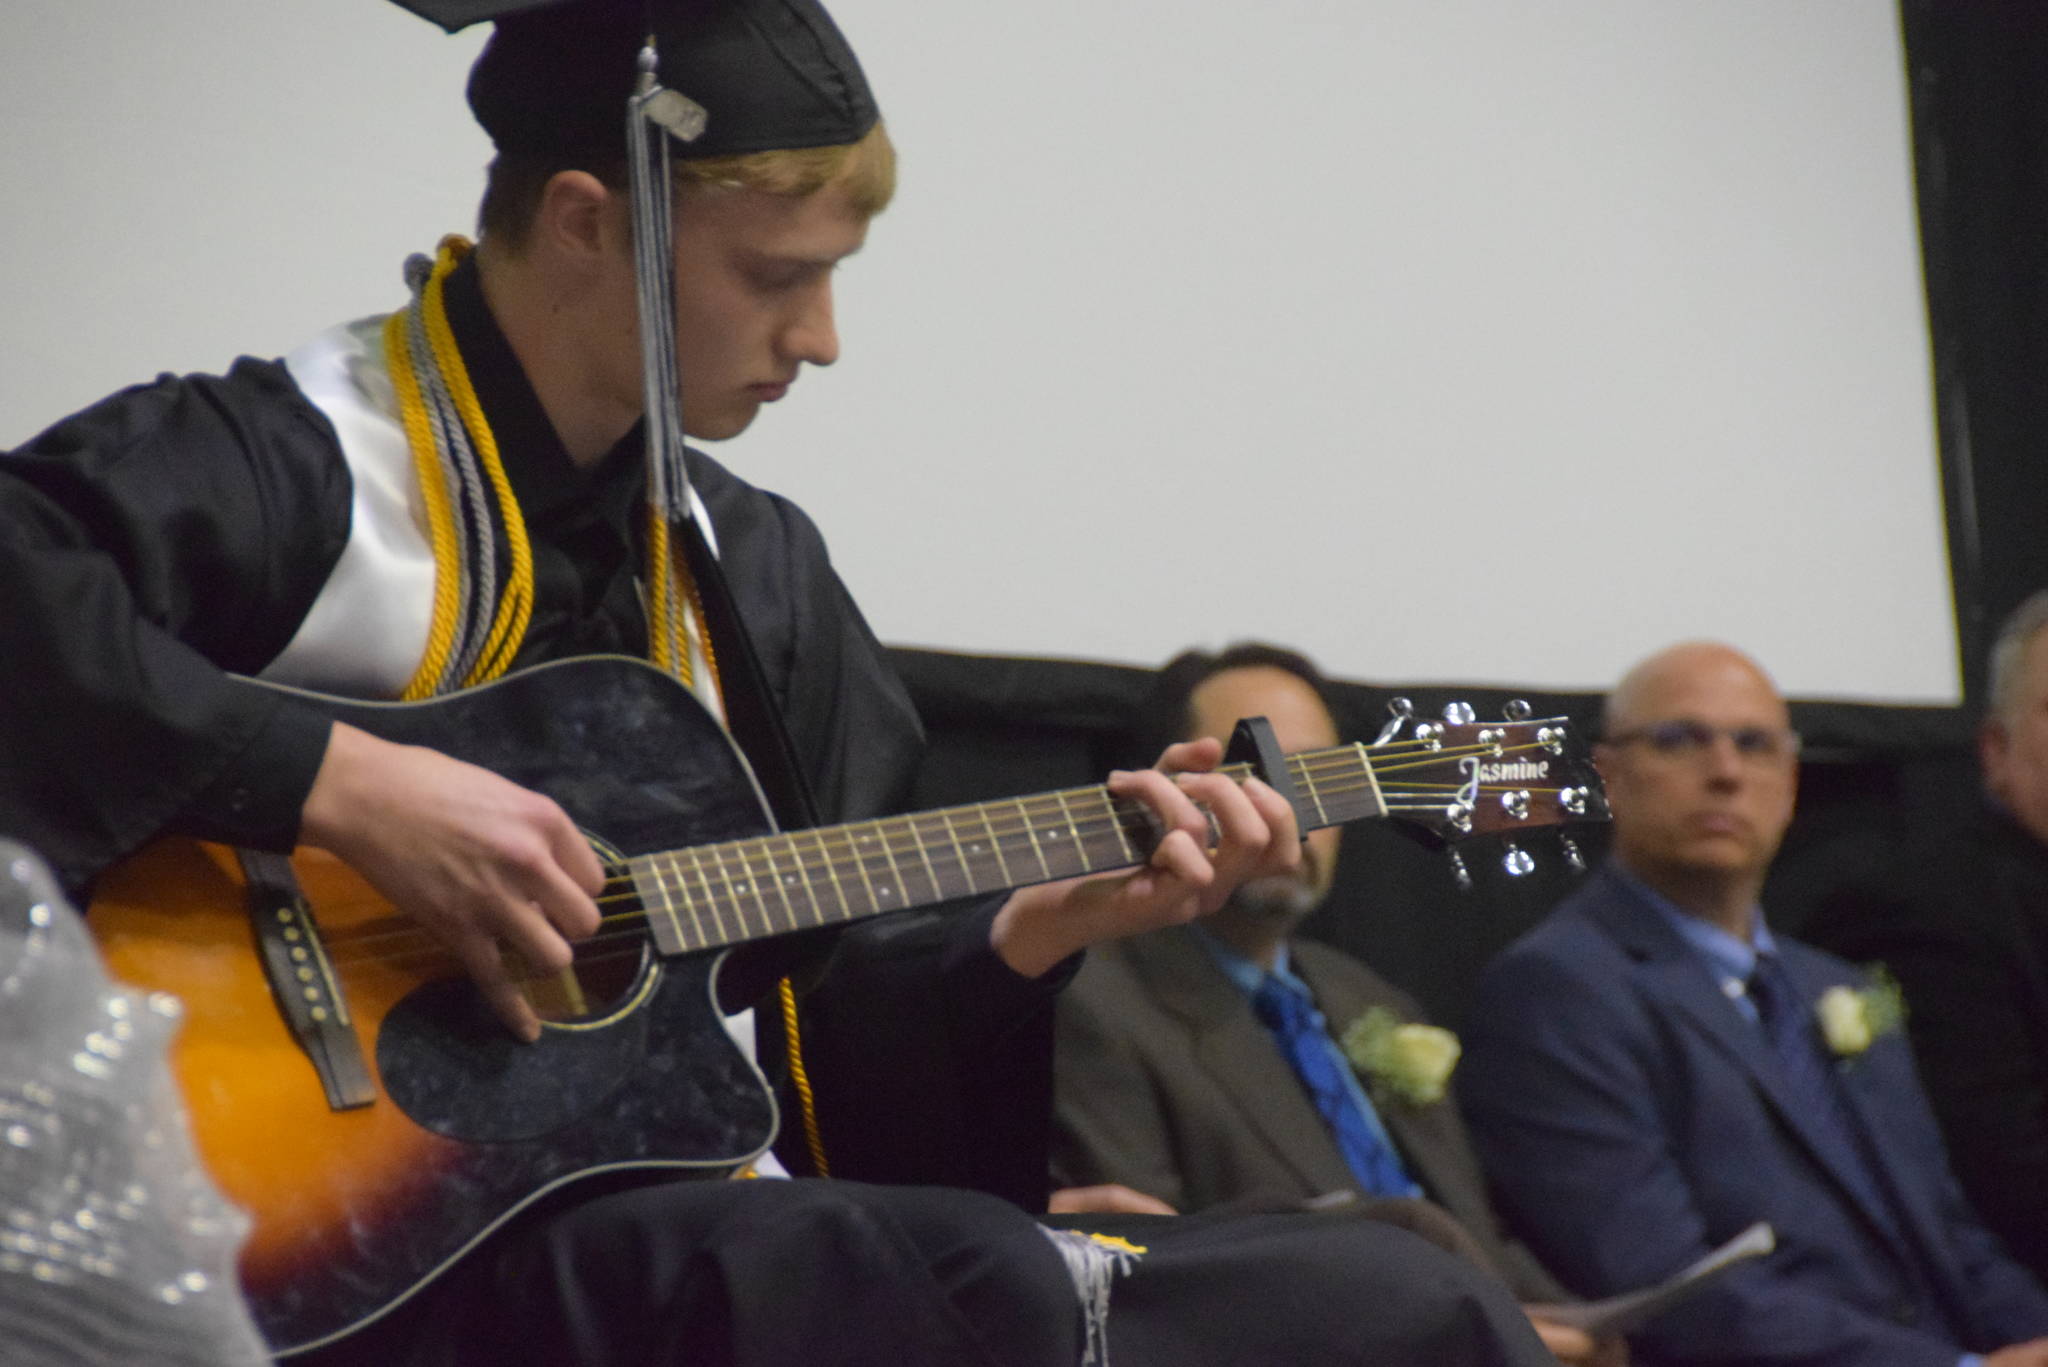 Gabriel Smith performs “Classical Gas” by Mason Williams during the 2019 Nikiski High School graduation in Nikiski, Alaska on May 20, 2019. (Photo by Brian Mazurek/Peninsula Clarion)